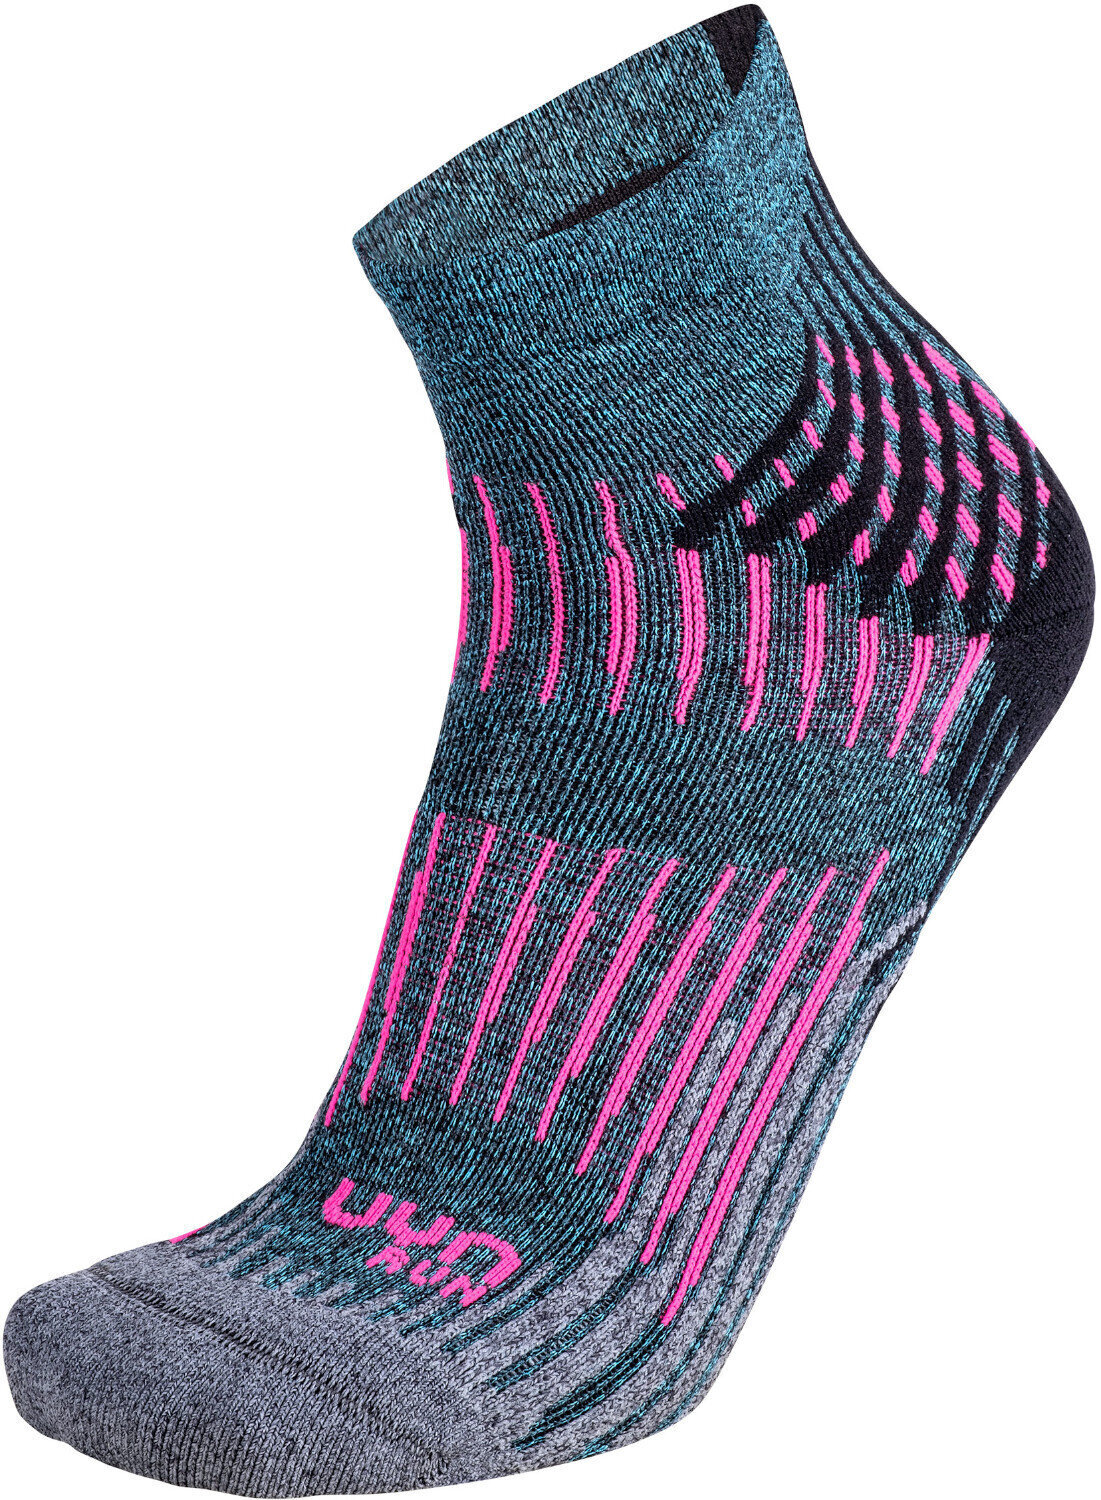 Tekaške nogavice
 UYN Run Shockwave Turquoise Melange-Grey-Pink 37/38 Tekaške nogavice